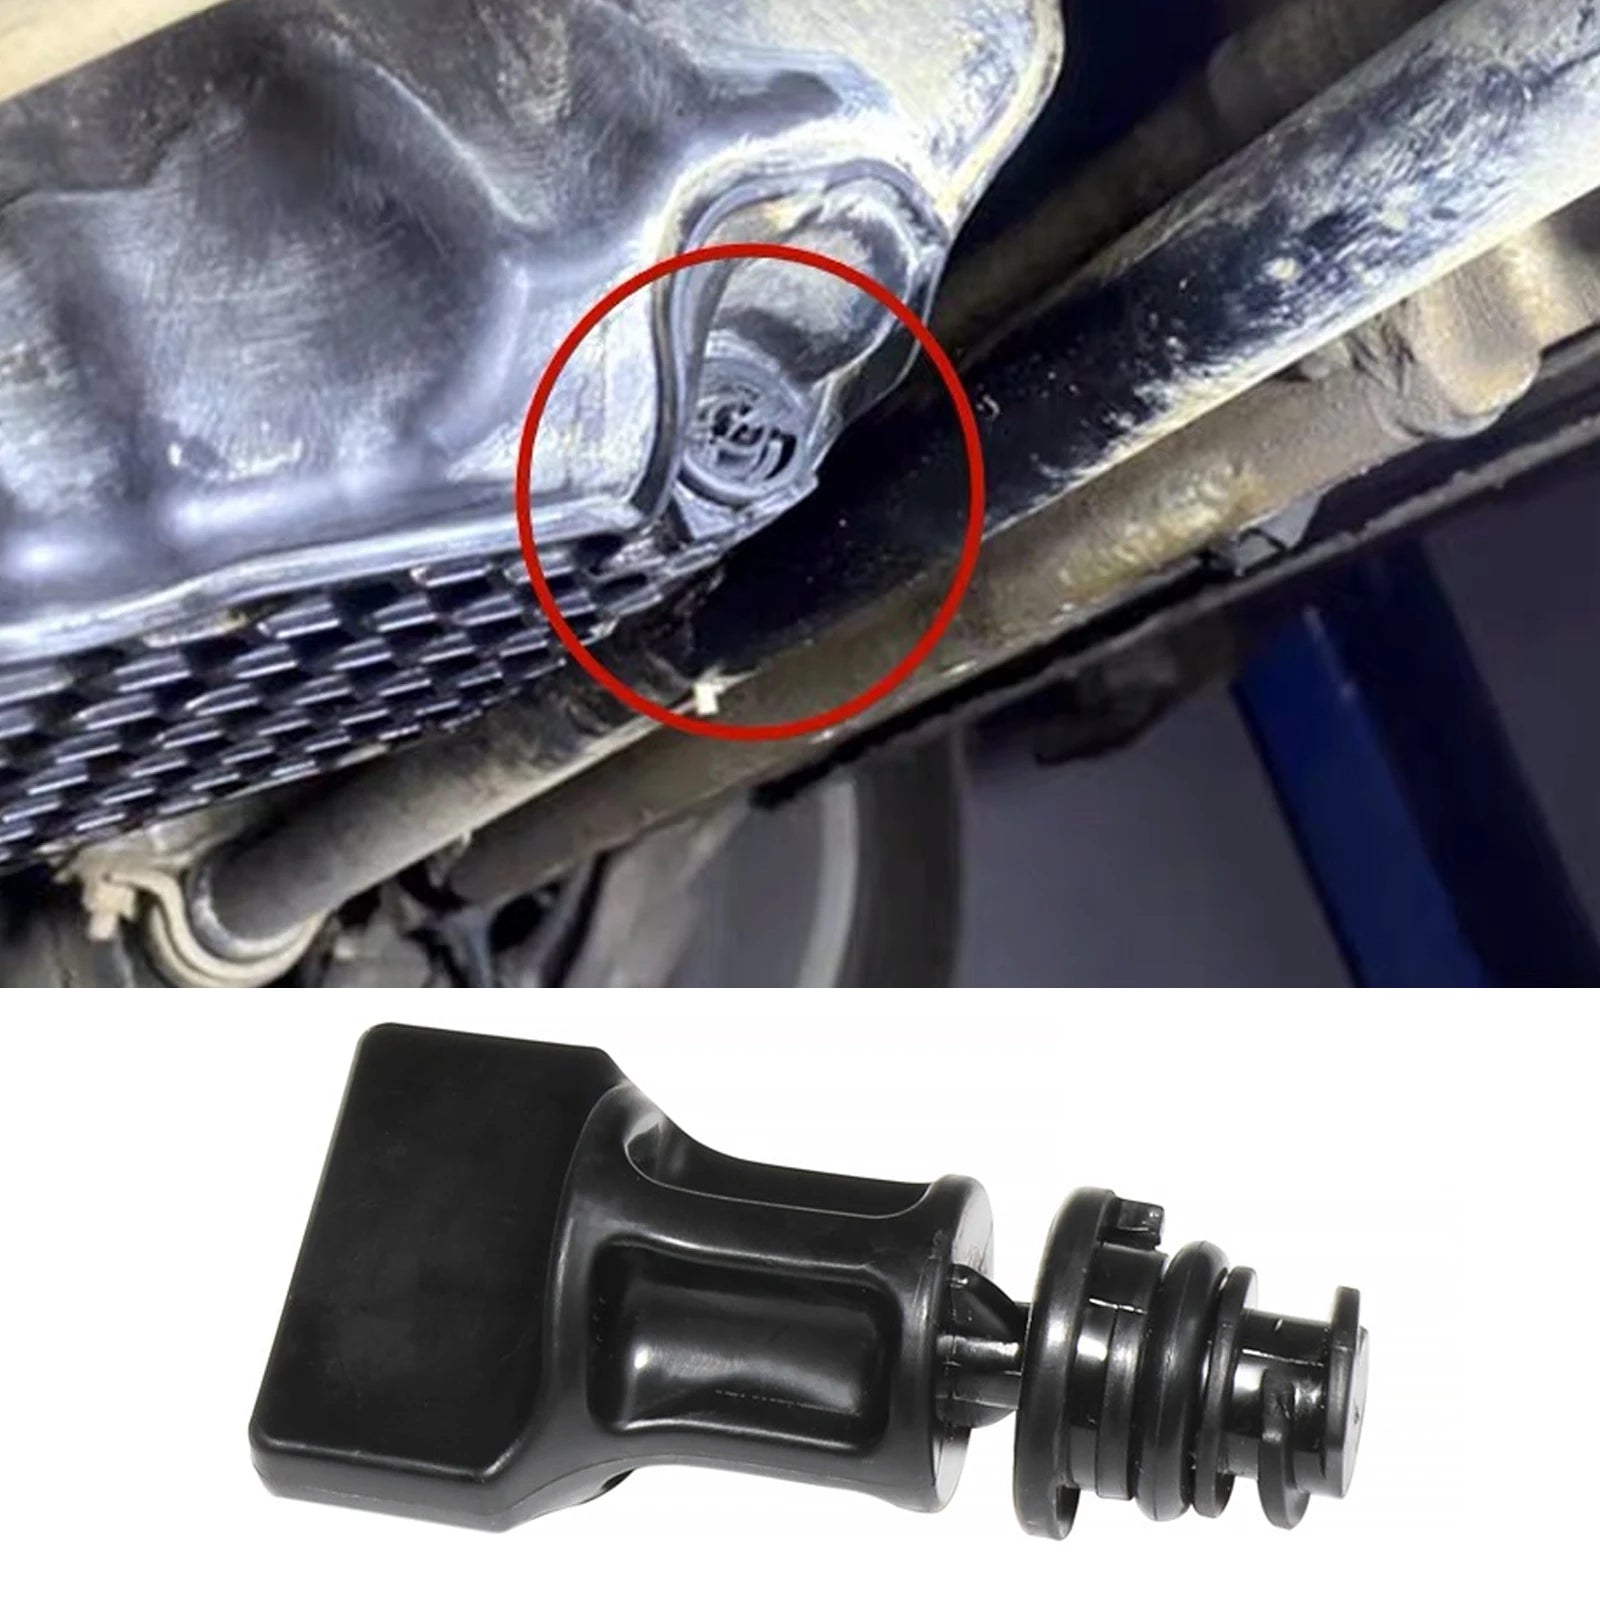 3PCs Oil Drain Plug Screw Removal Tool For VW Audi EA888 Third Generation Engine